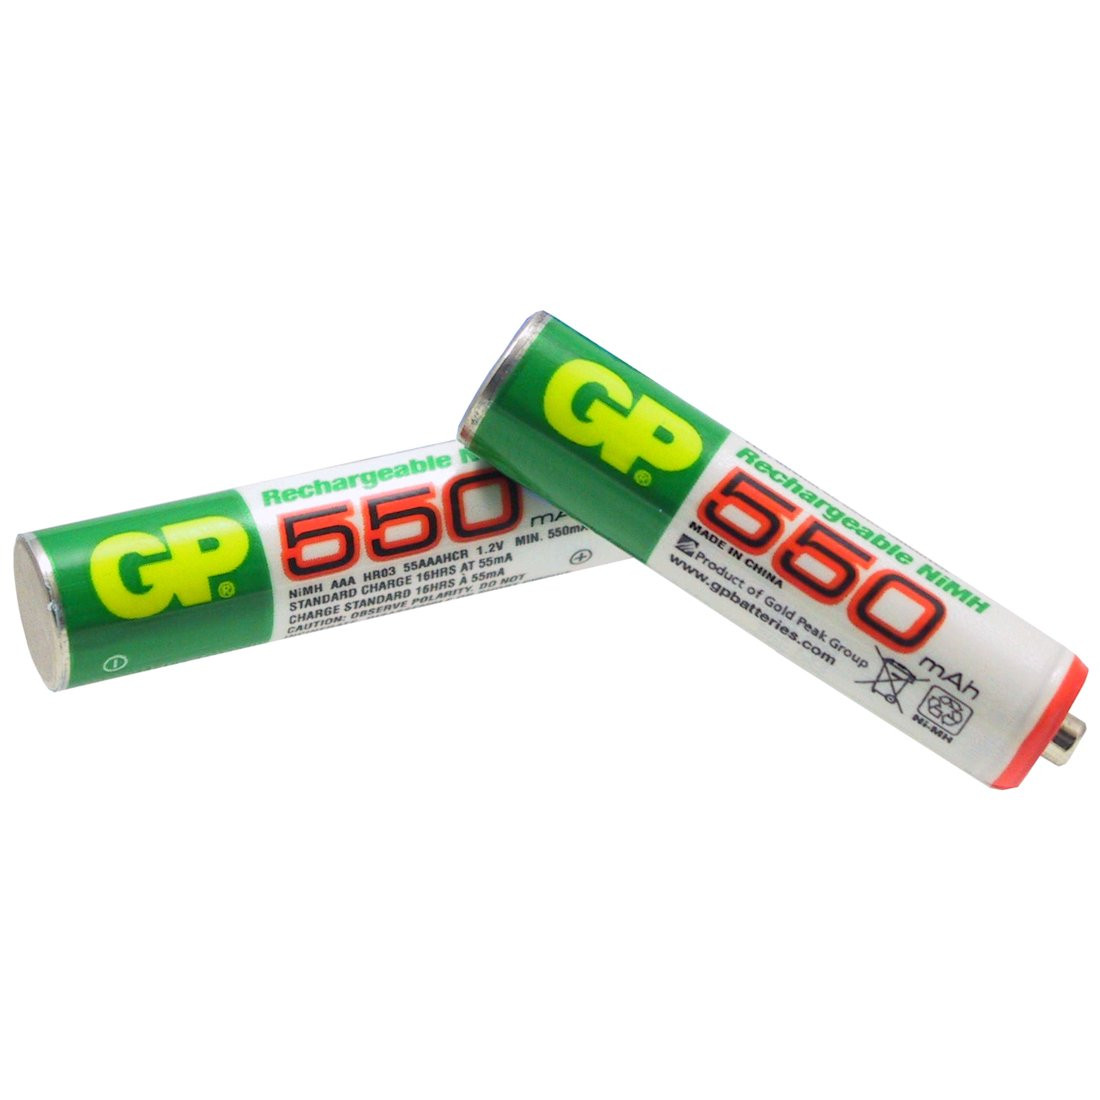 Original Batteries NIMH 550mAH (2 pc.) for Gigaset A2 / A34 / A38H / A400H...